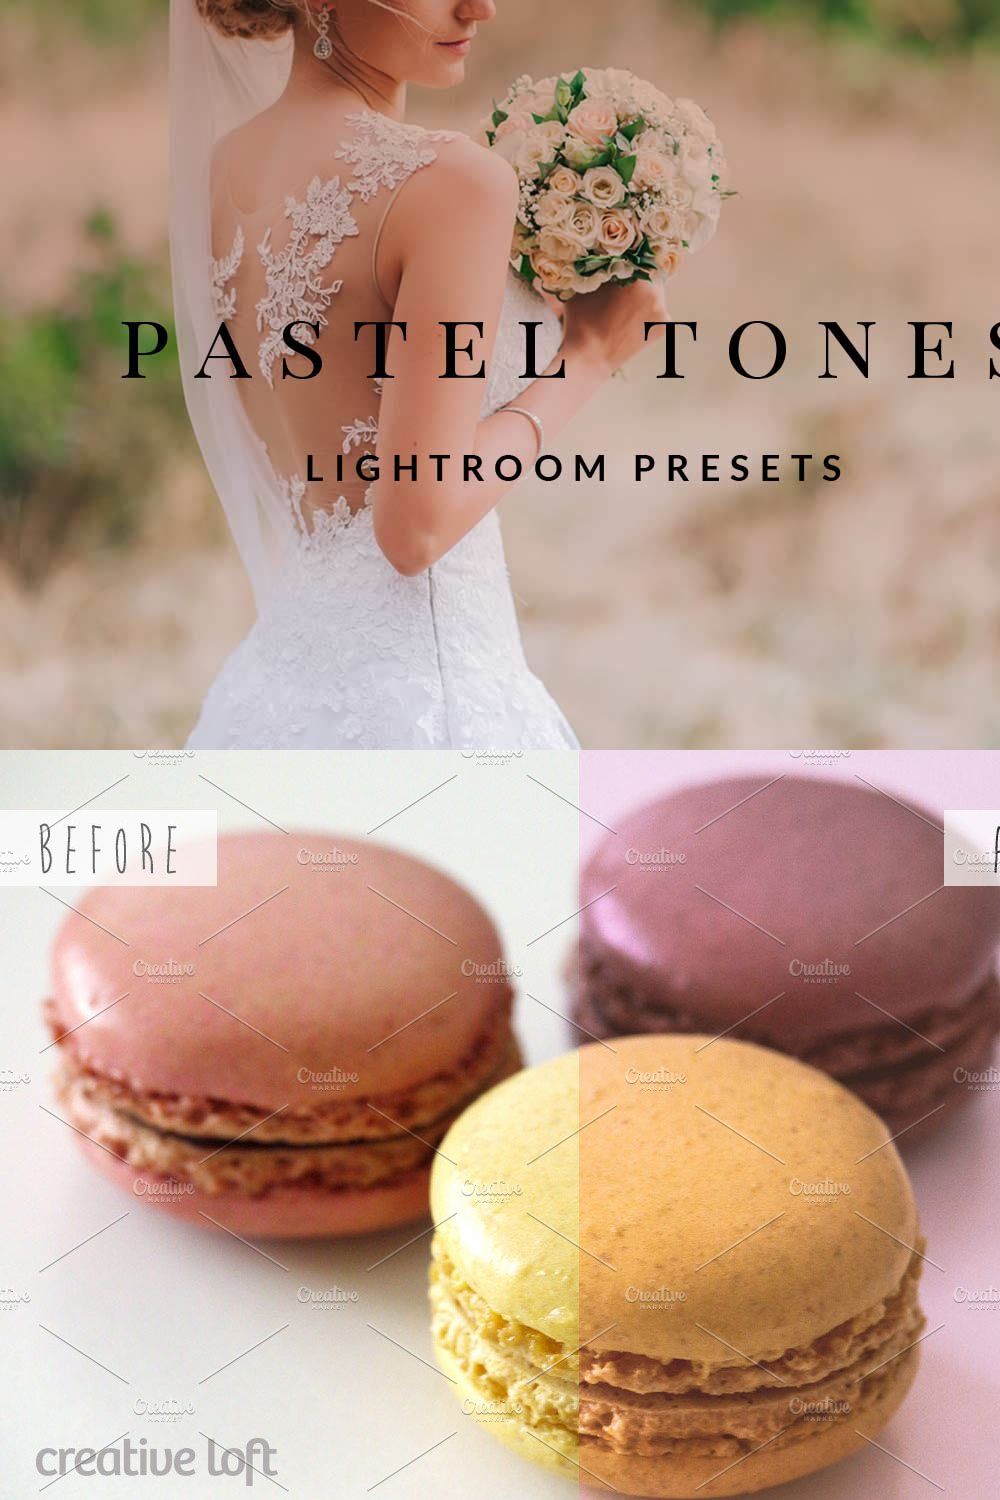 Pastel tones - Lightroom presets pinterest preview image.